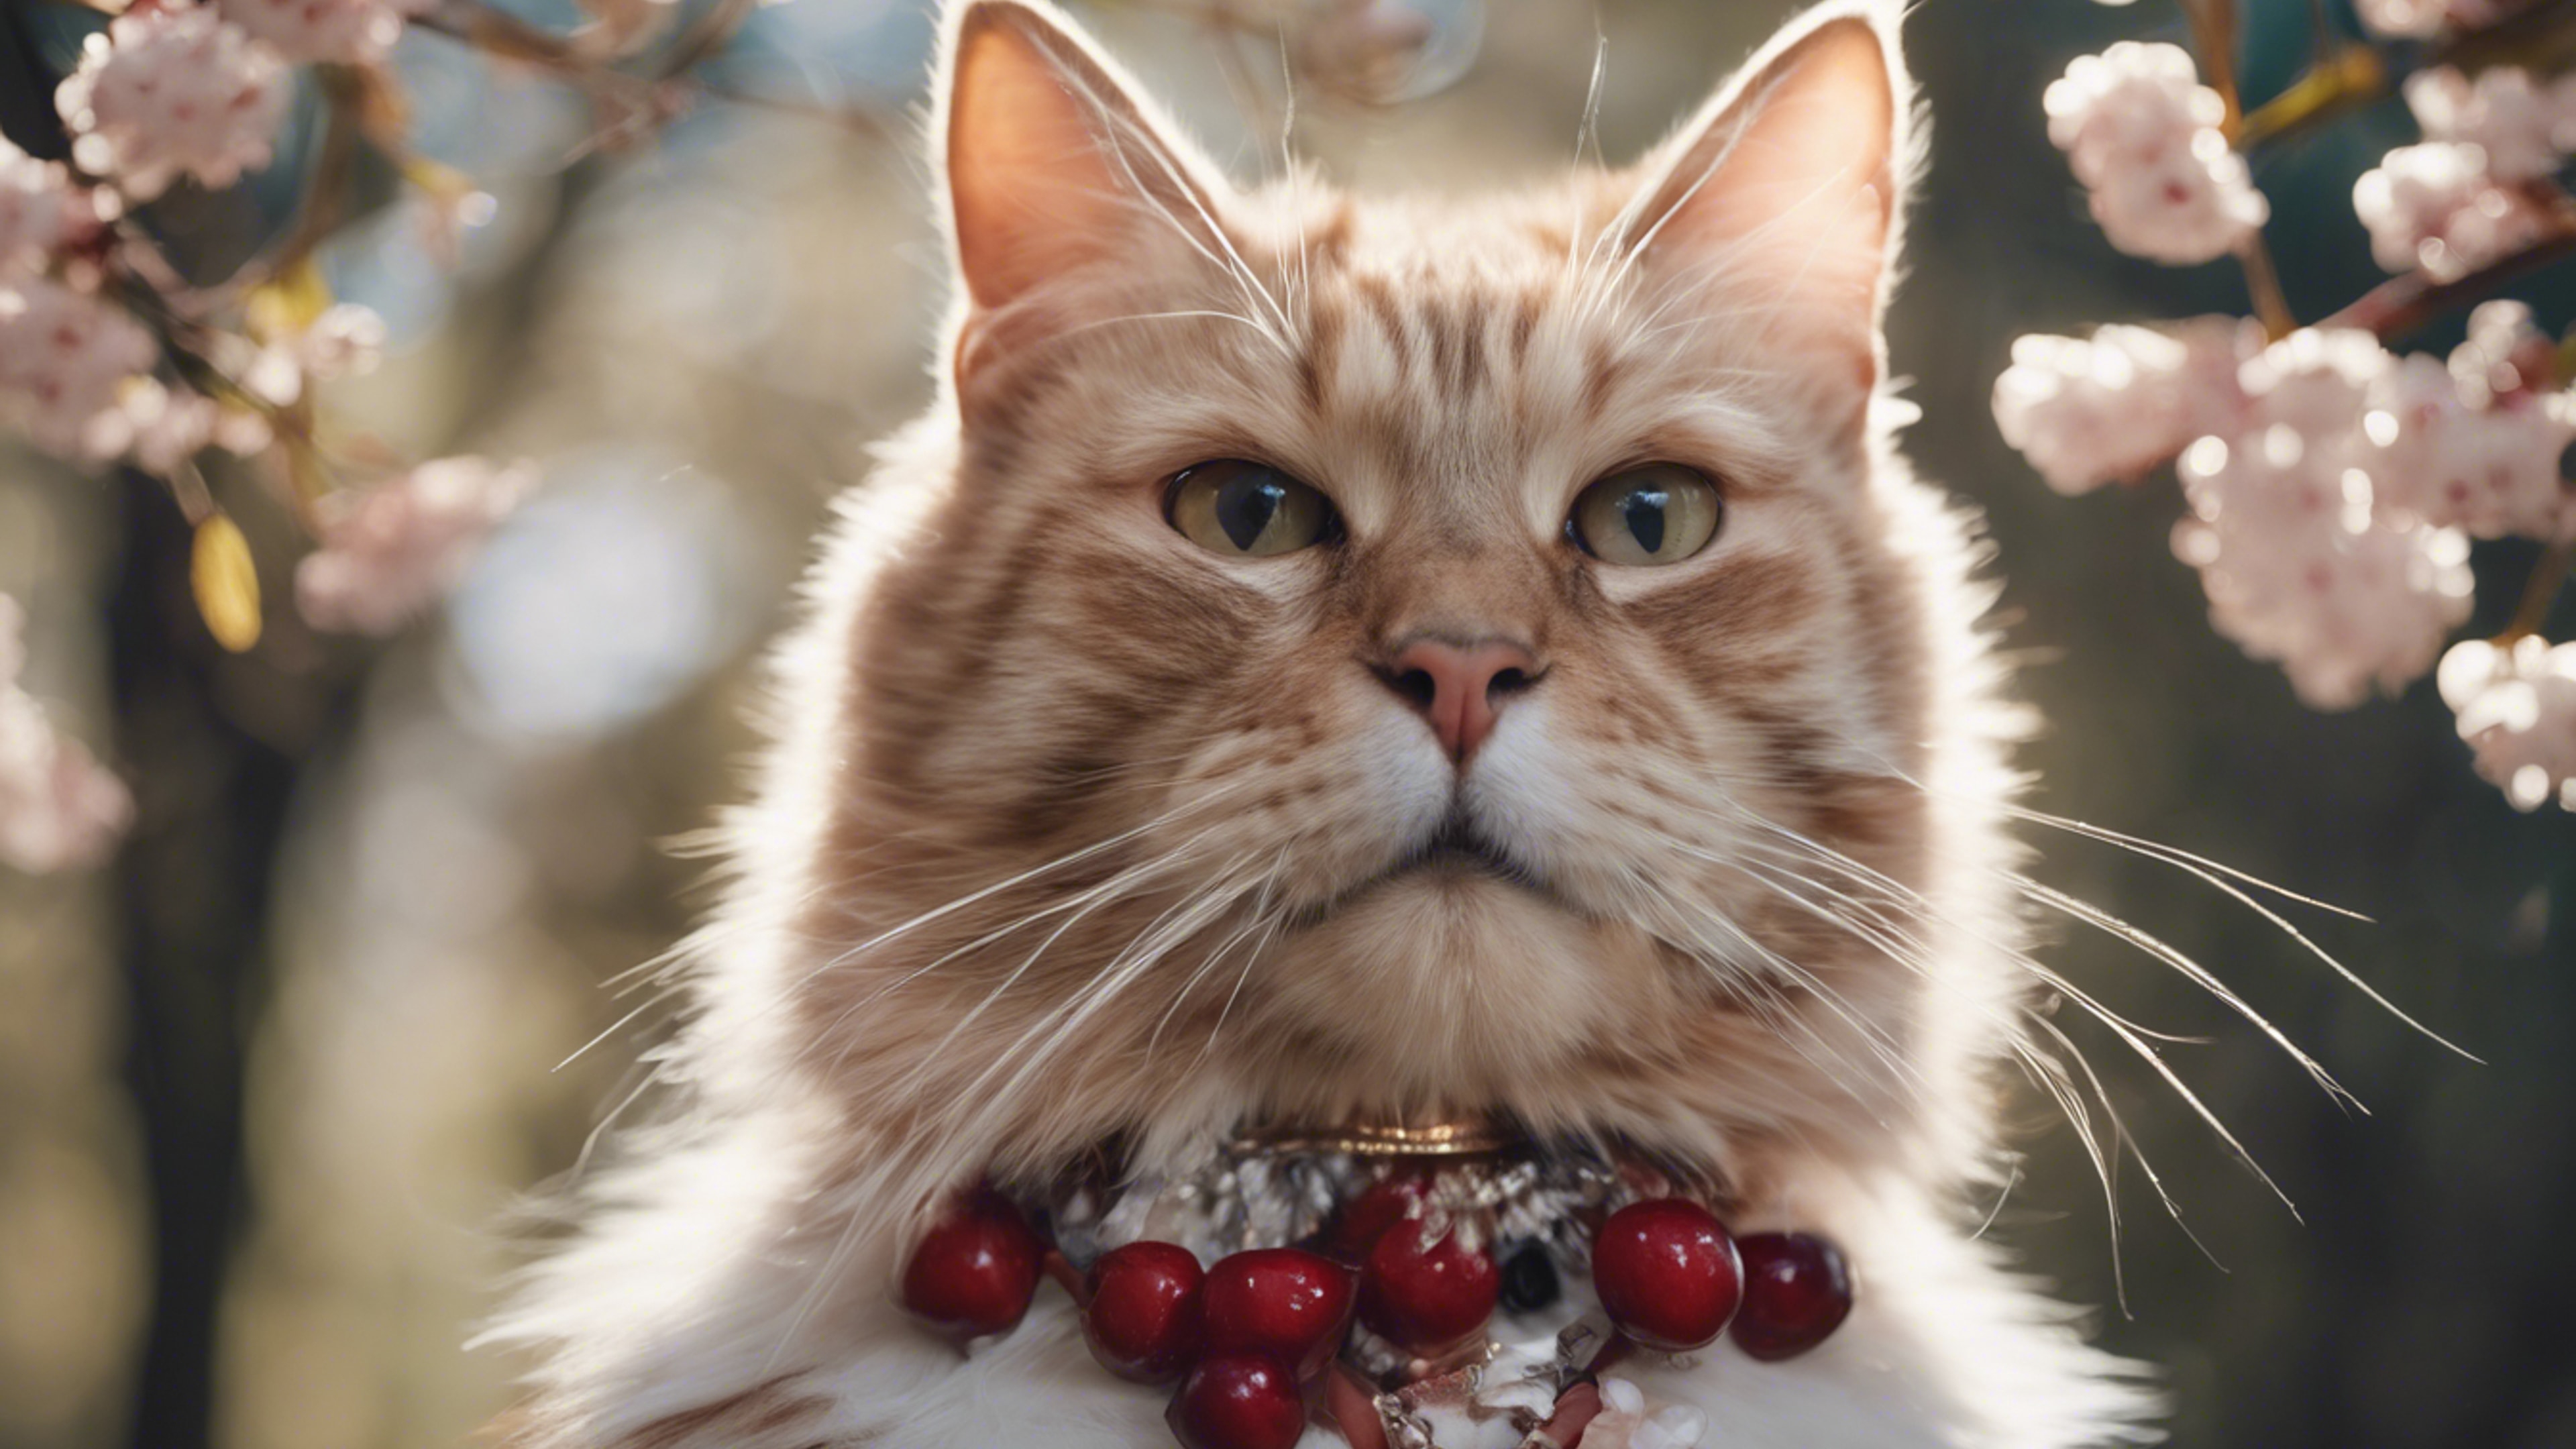 A photo-realistic portrait of a cat with a cherry necklace.壁紙[d26e83790b2044338a54]